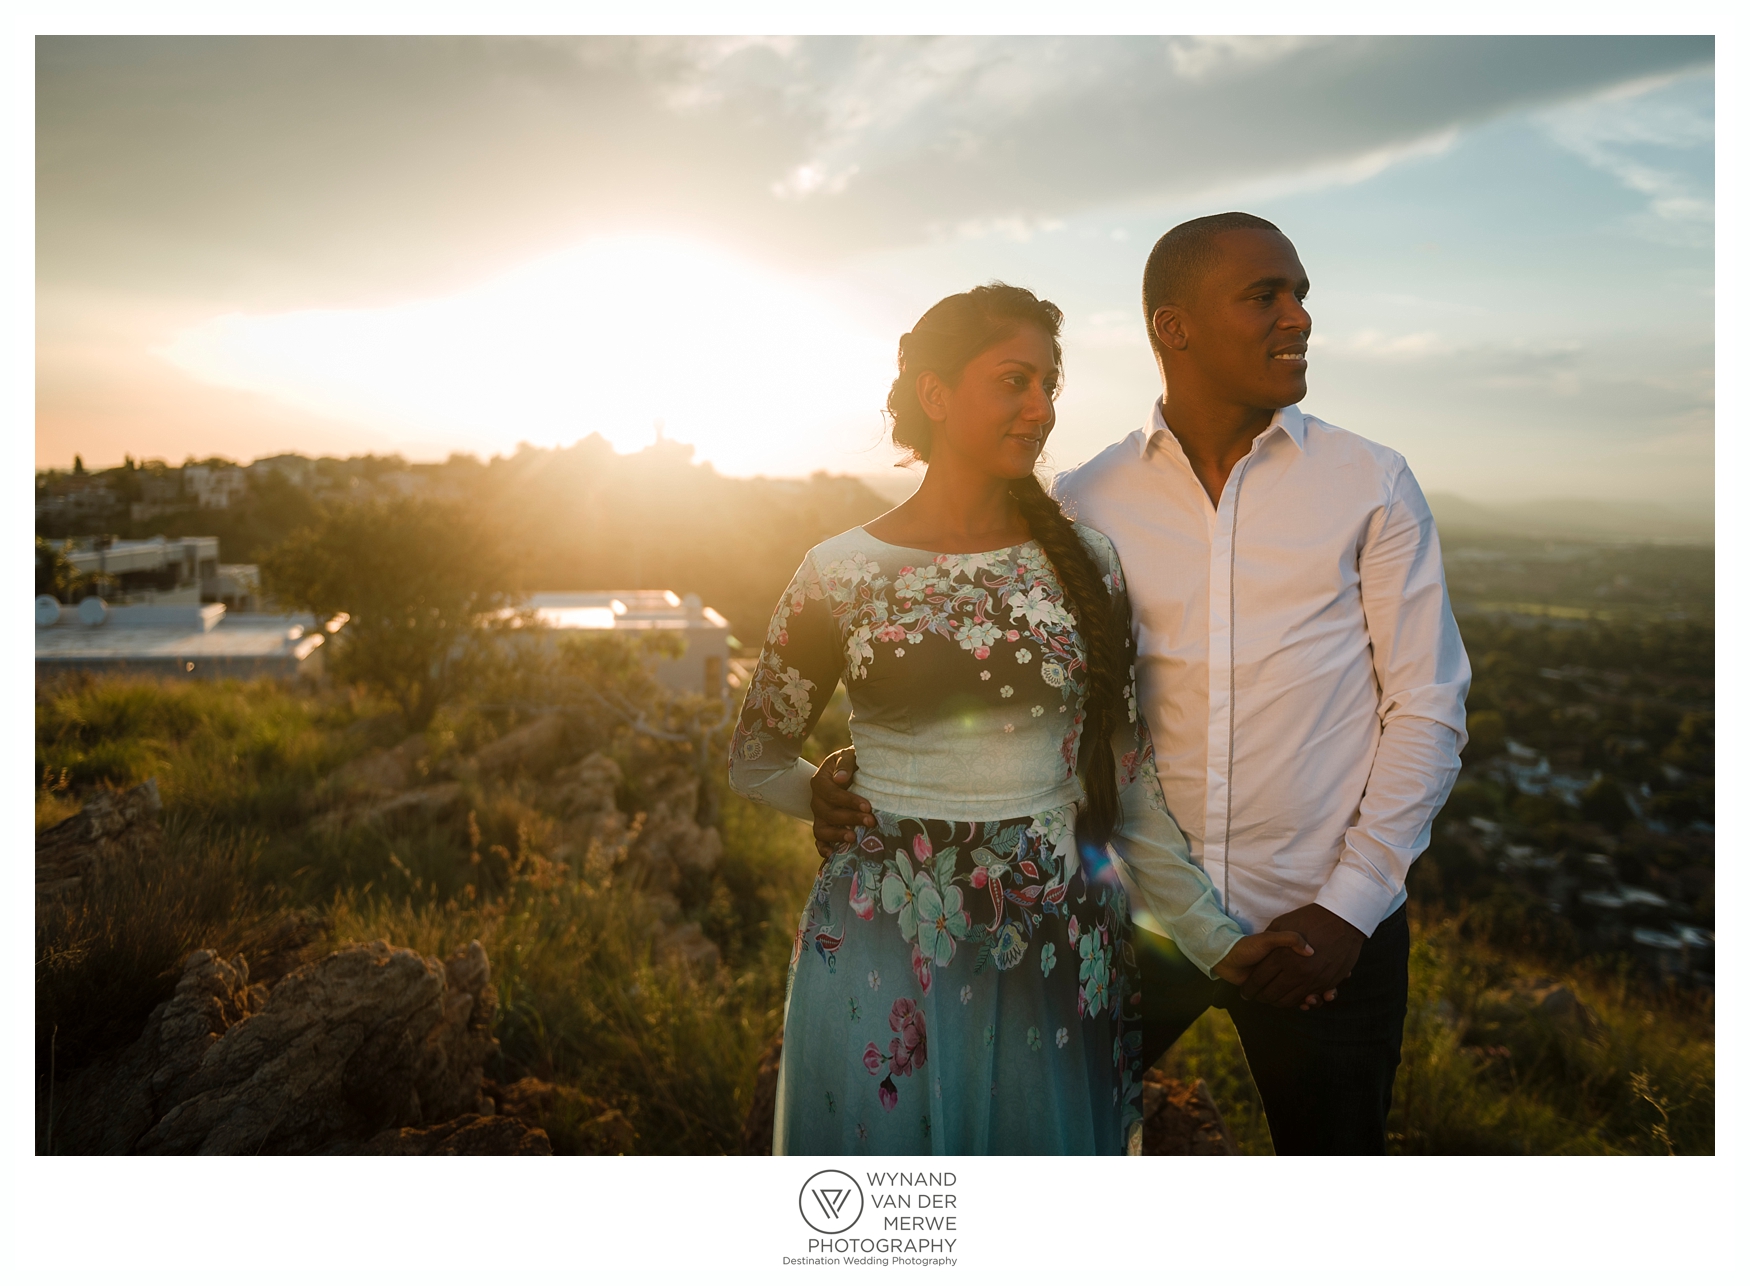 Timothy & Jehdene's beautiful sunset engagement session